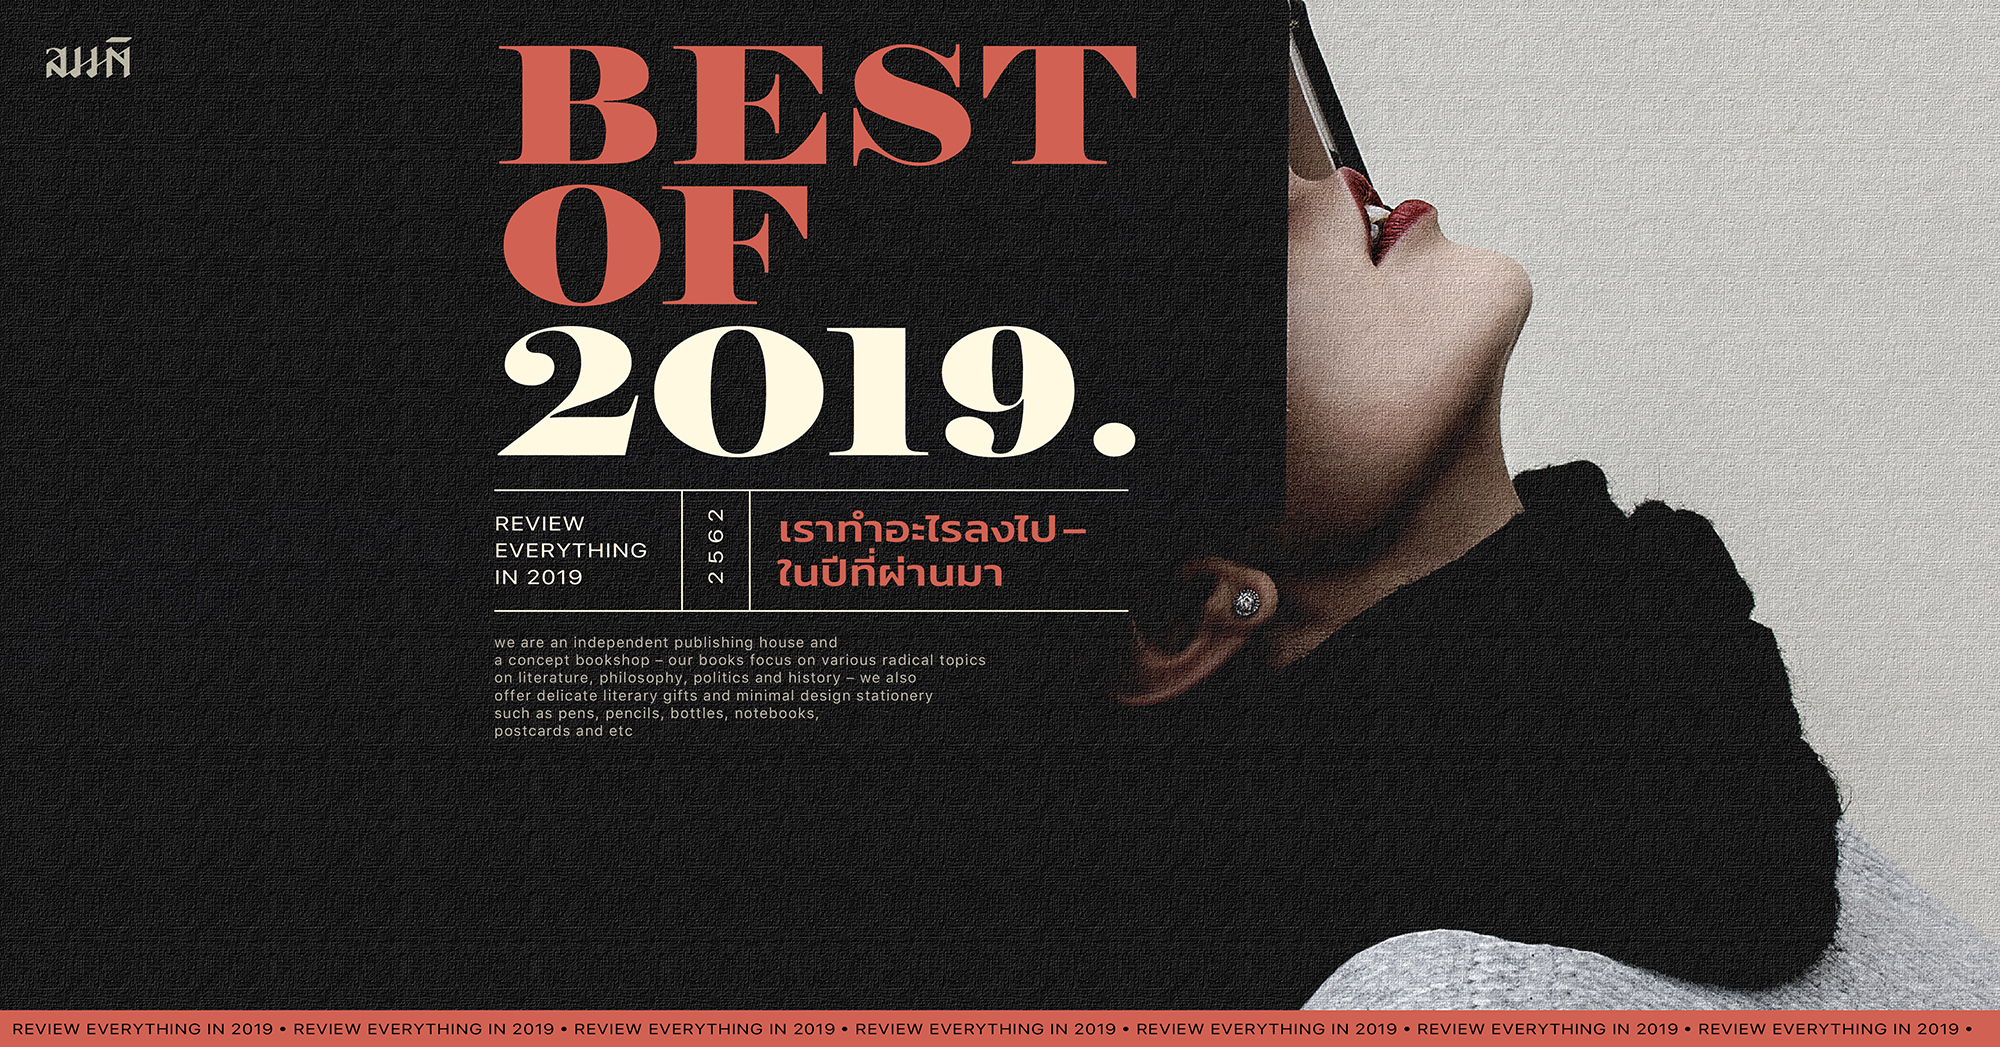 Best of 2019 ประมวลภาพรวมในนาม 'สมมติ'